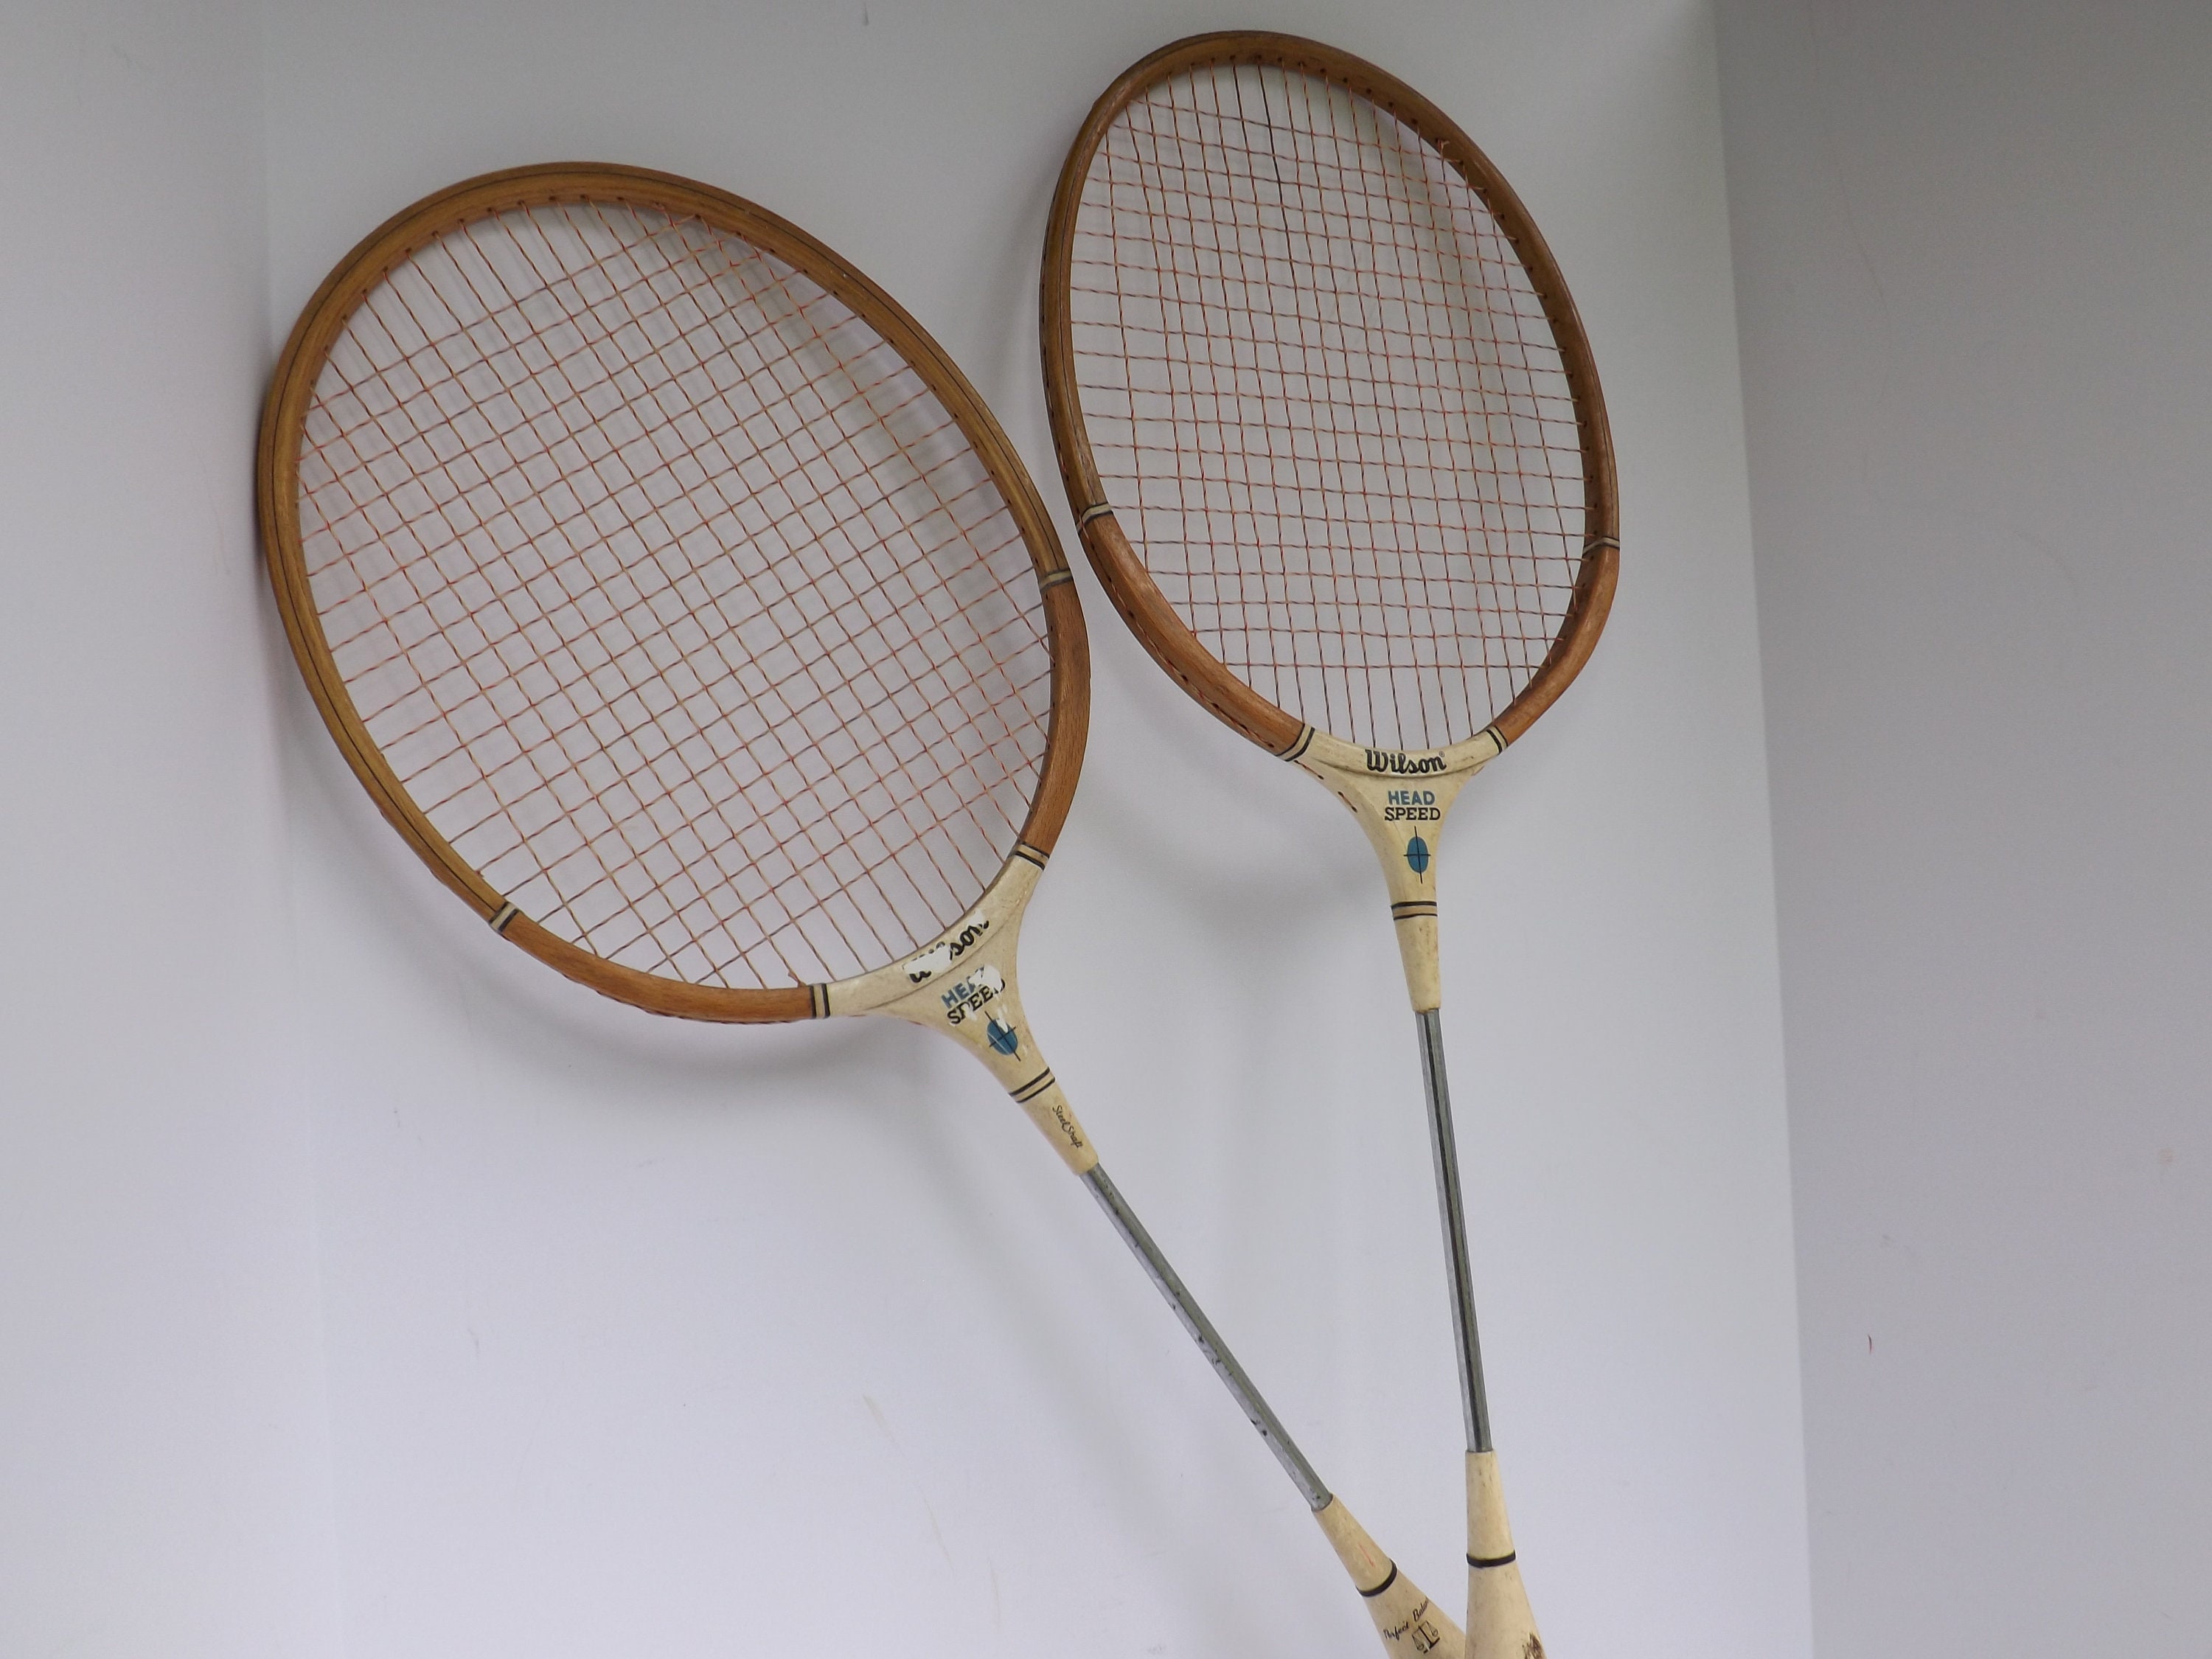 Set 2 Wilson Badminton Racquet Racket Vintage Retro Wood